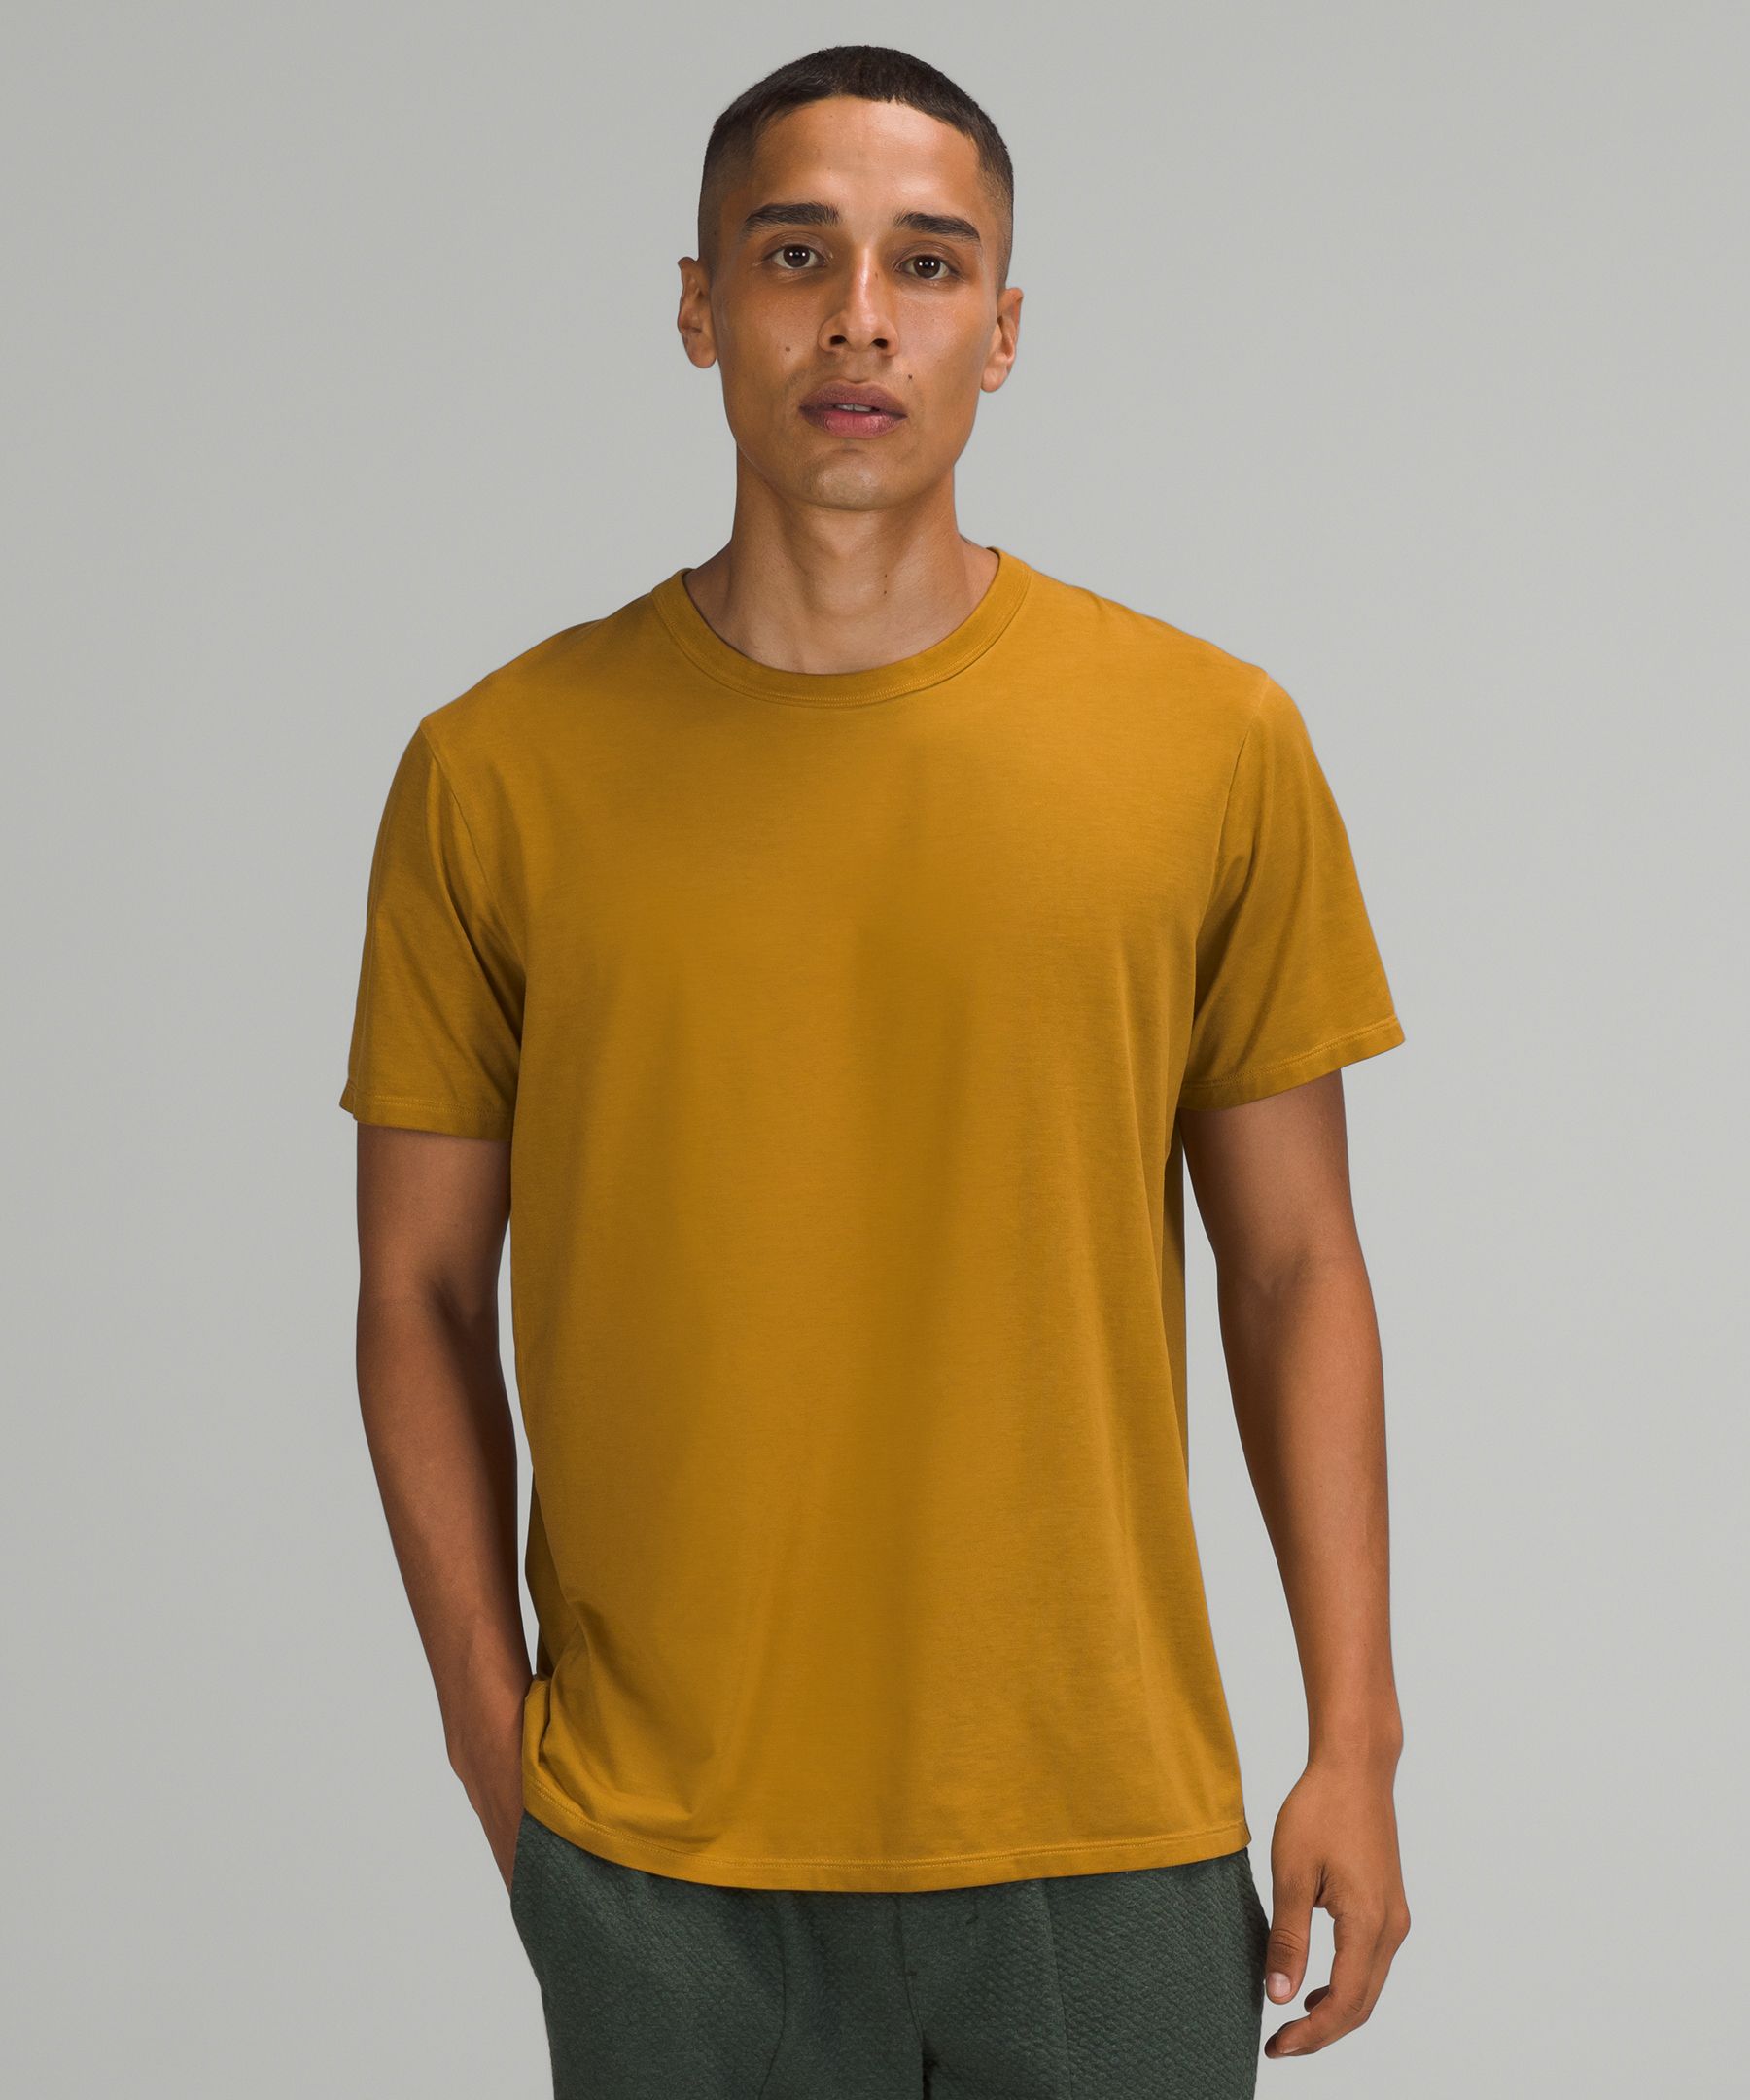 Lululemon The Fundamental T-shirt In Breeze Dye Gold Spice